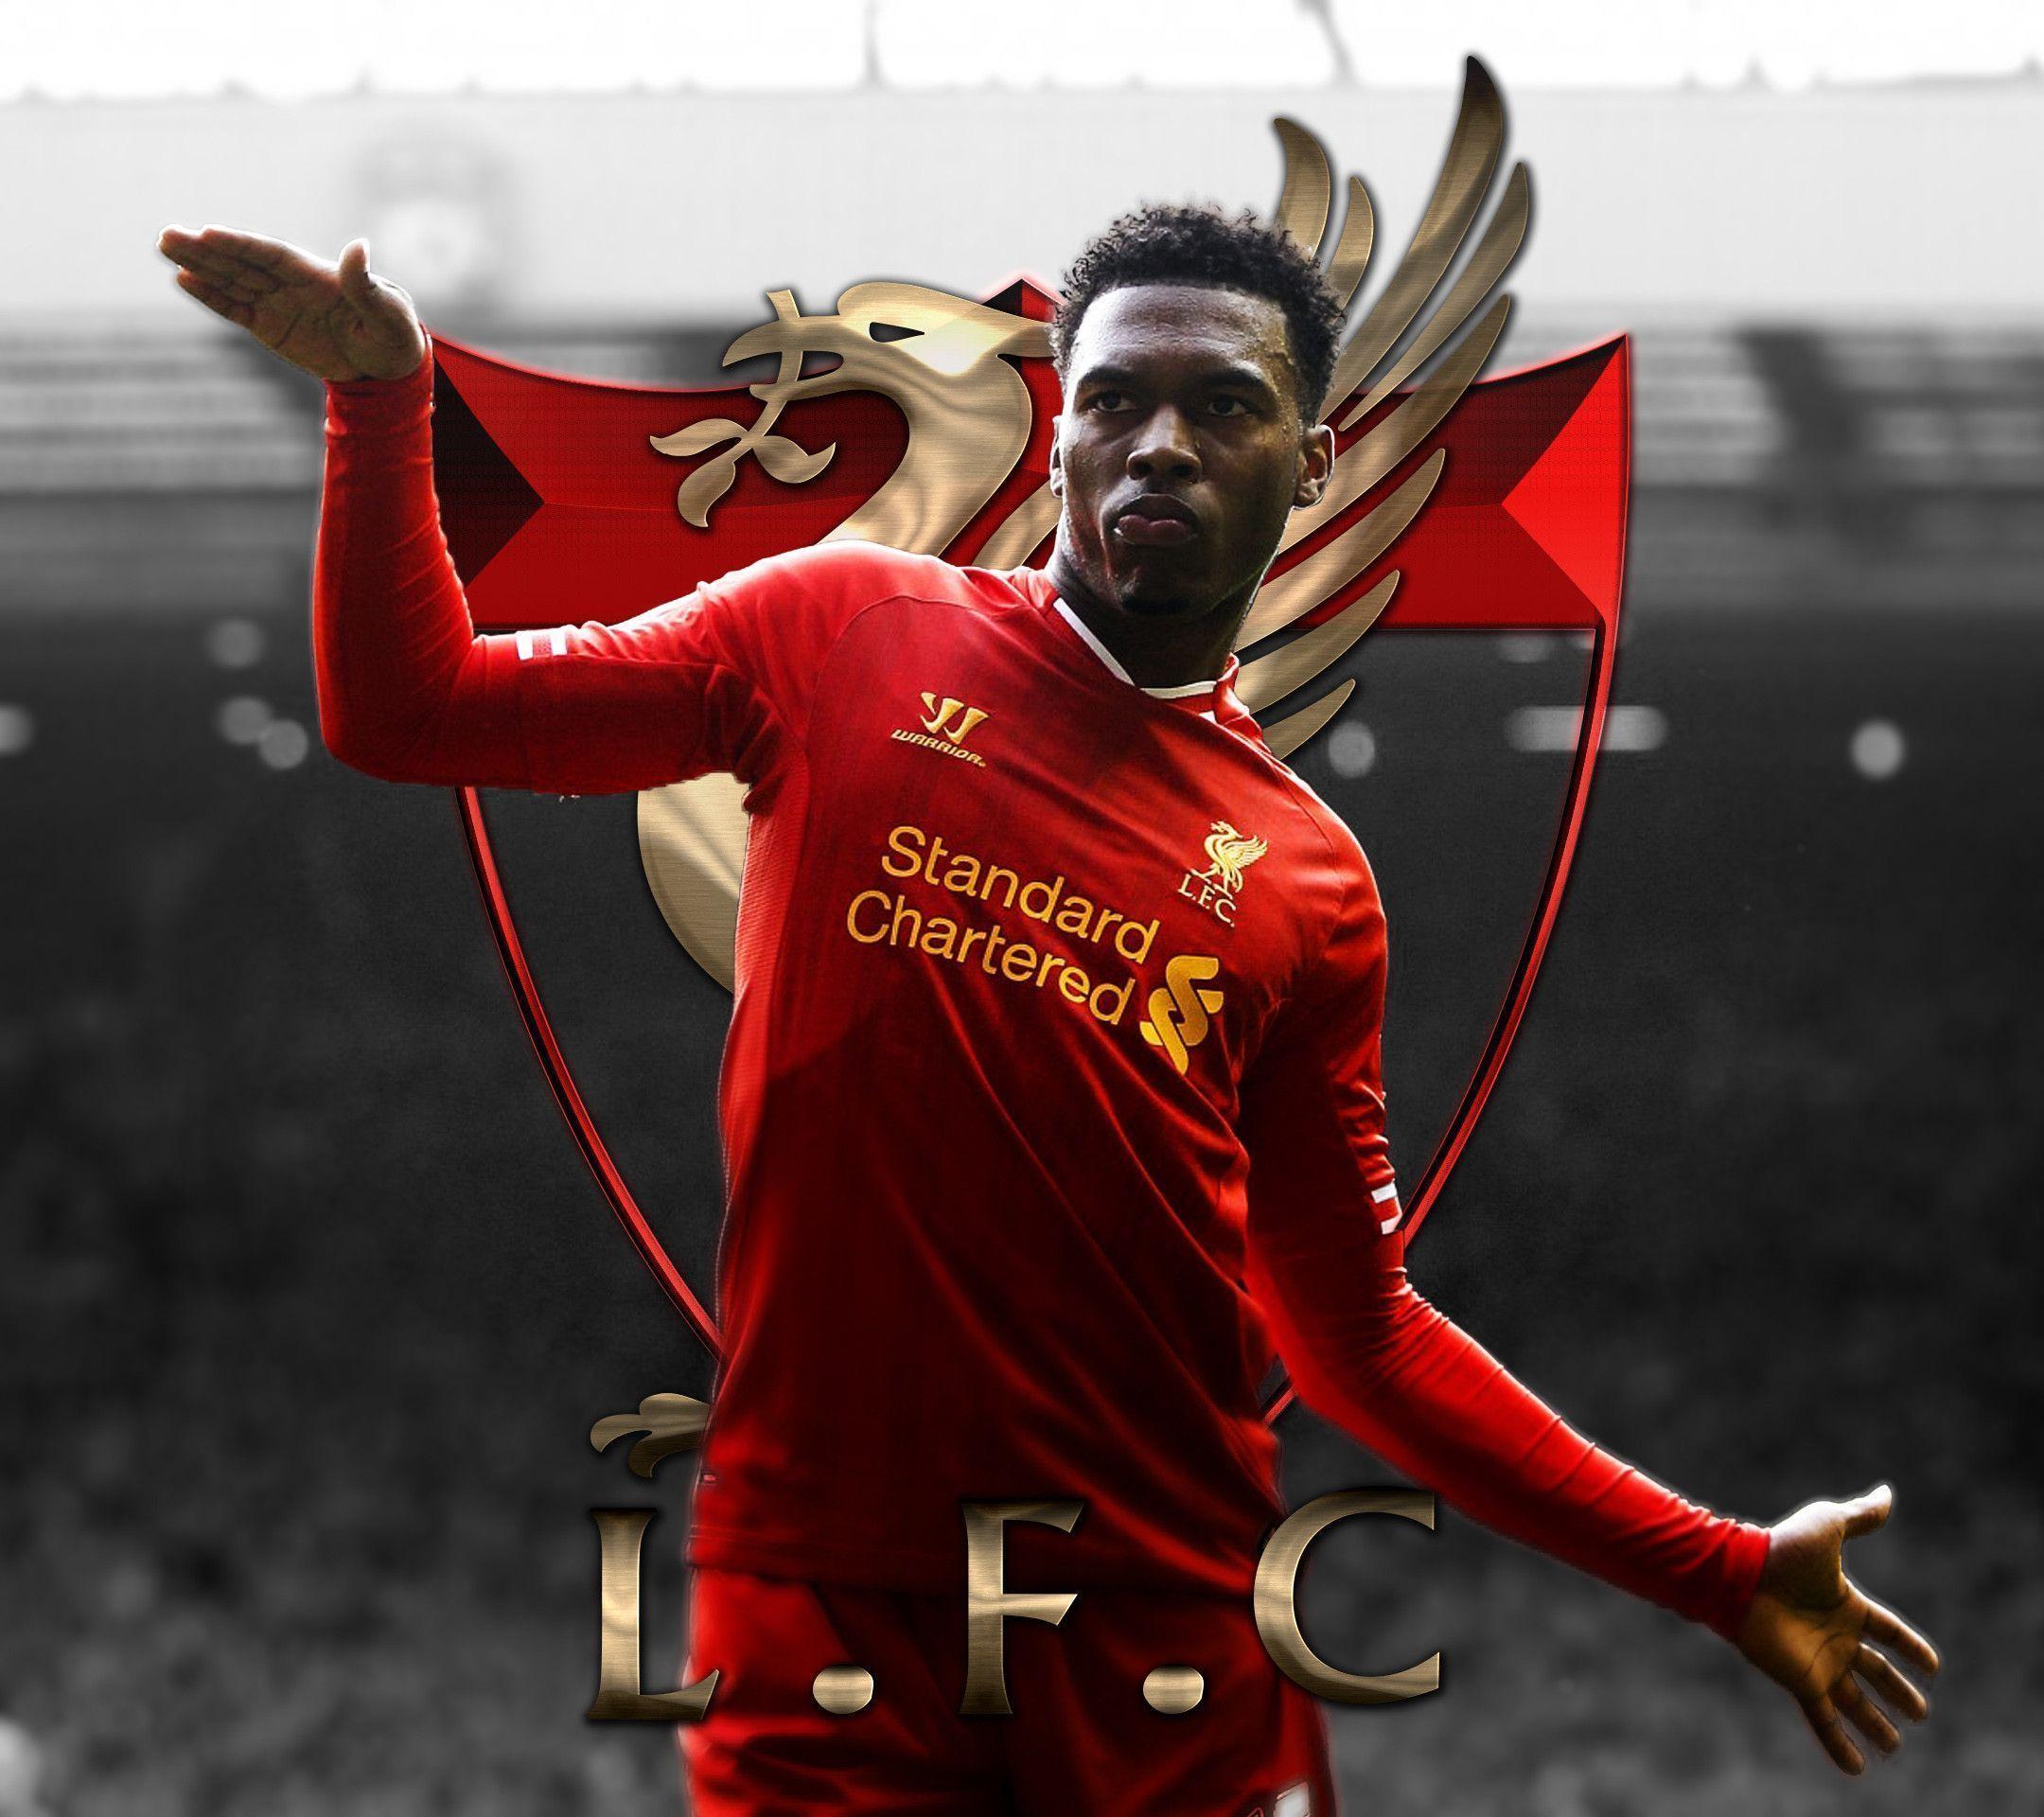 Daniel Sturridge, Liverpool FC player image for desktop wallpapers